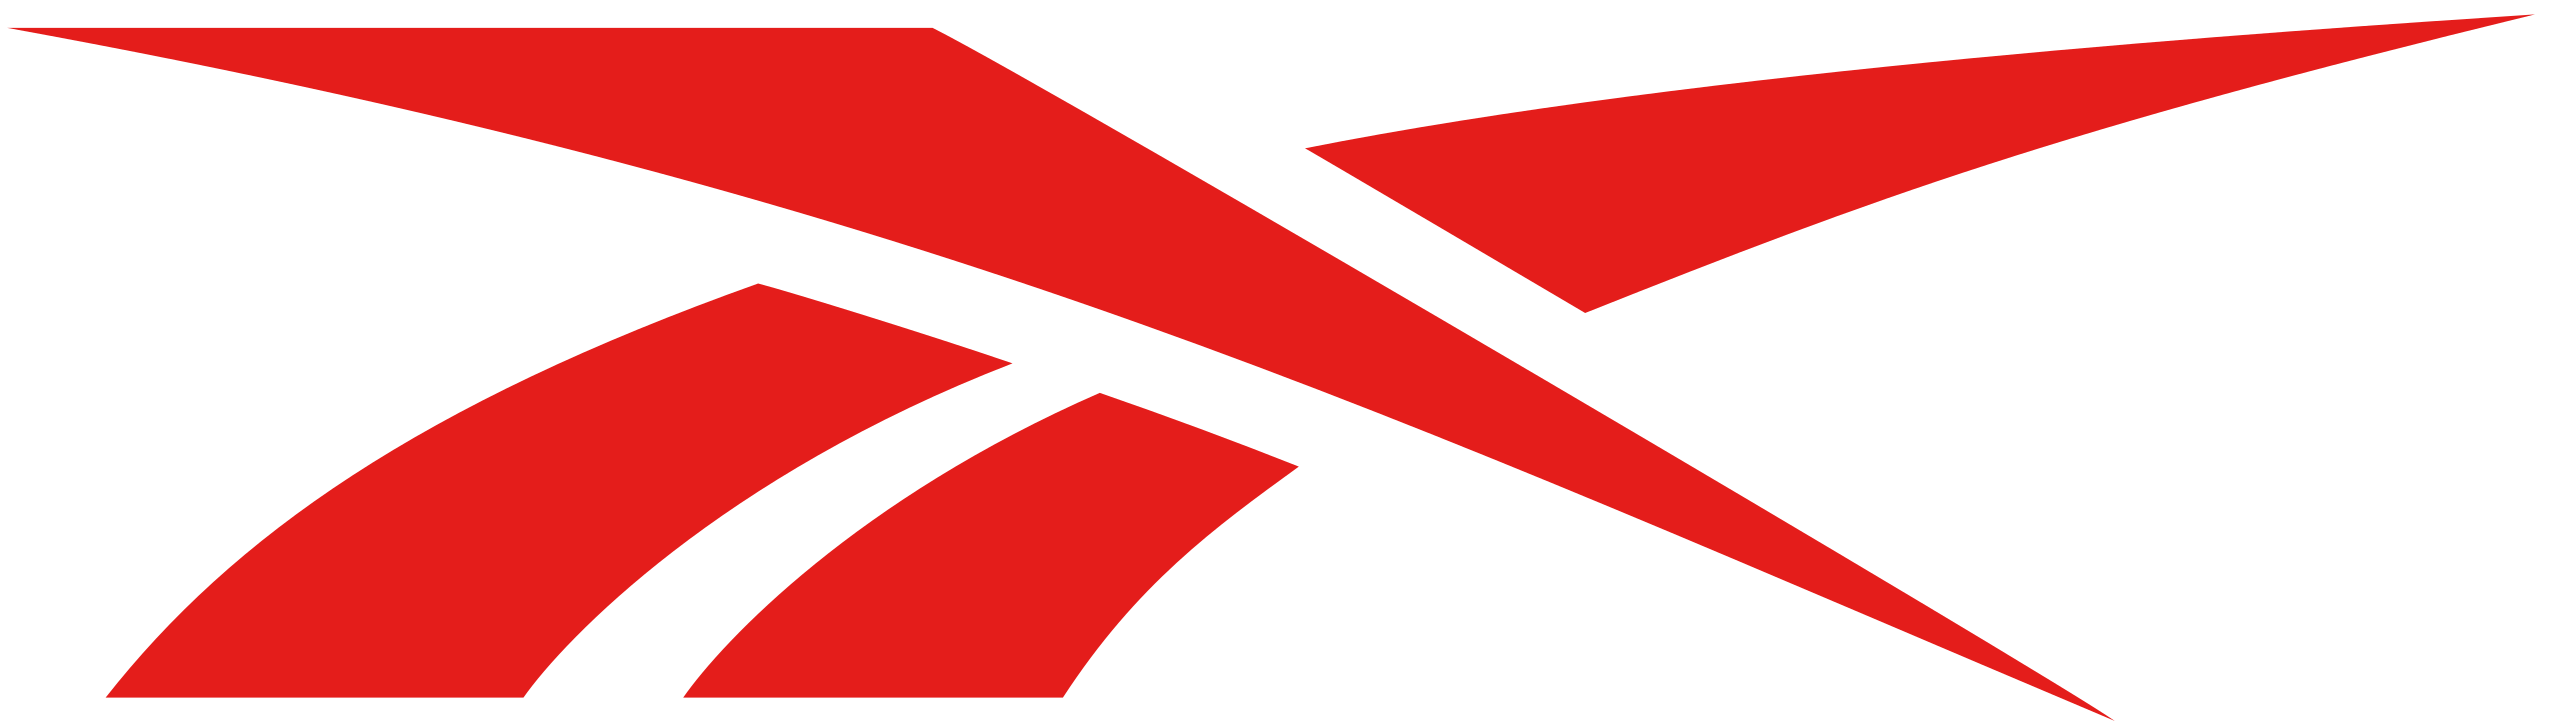 Archivo:Reebok red logo.svg - Wikipedia, la enciclopedia